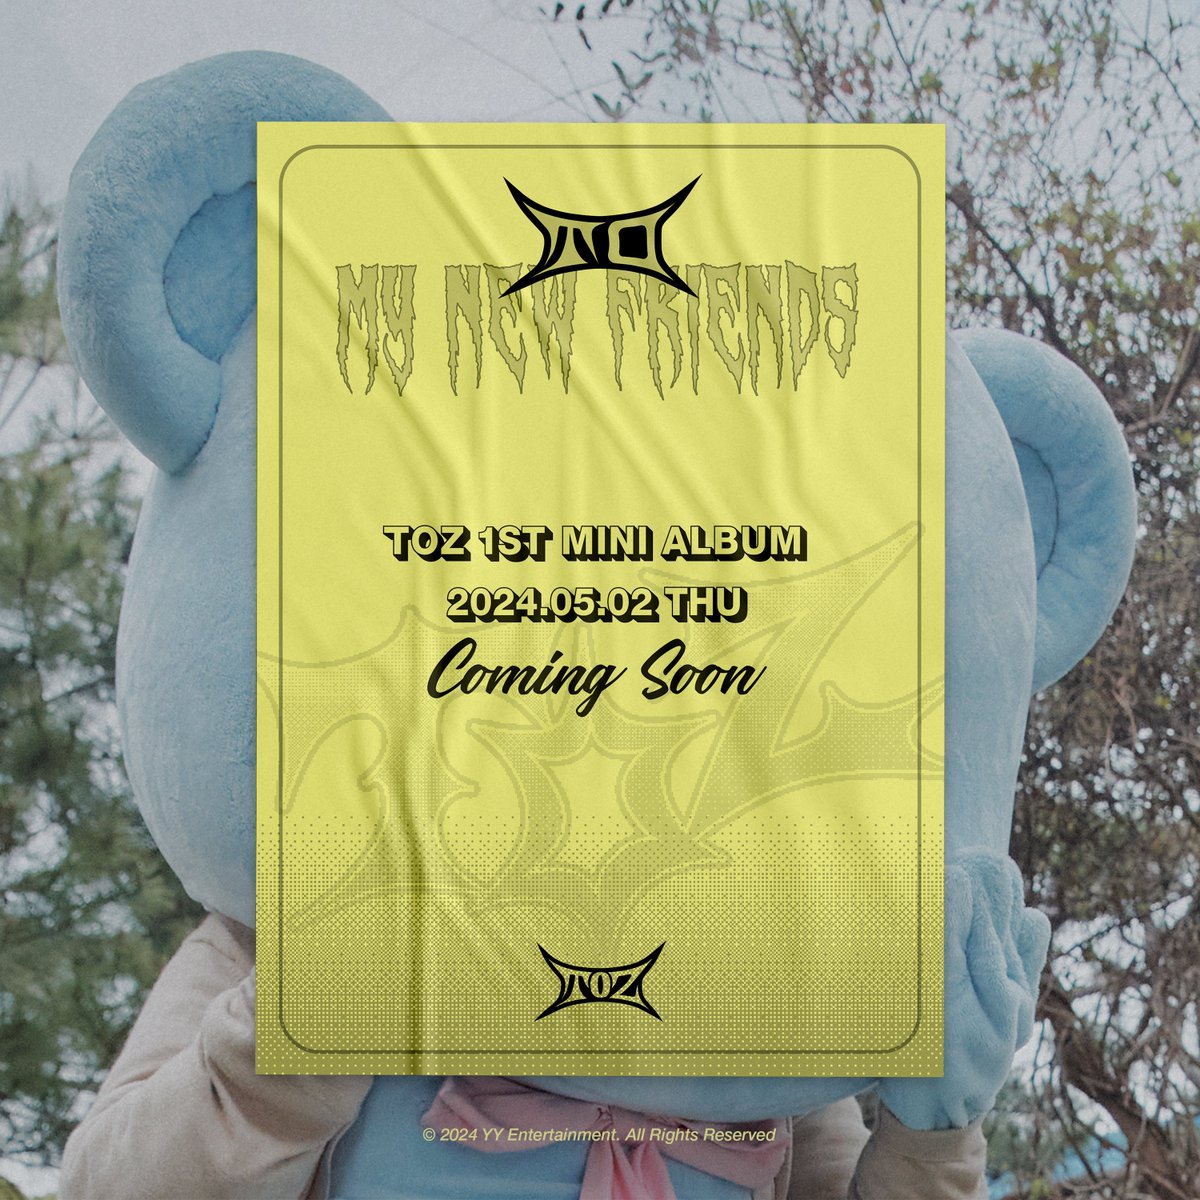 TOZ(티오지) Korea 1st Mini Album 【𝑇𝑂 𝑚𝑦 𝑛𝑒𝑤 𝑓𝑟𝑖𝑒𝑛𝑑𝑠】 👟2024.05.02 #TOZ #티오지 #TO_my_new_friends #TOZ_KOREA_1ST_MINI_ALBUM